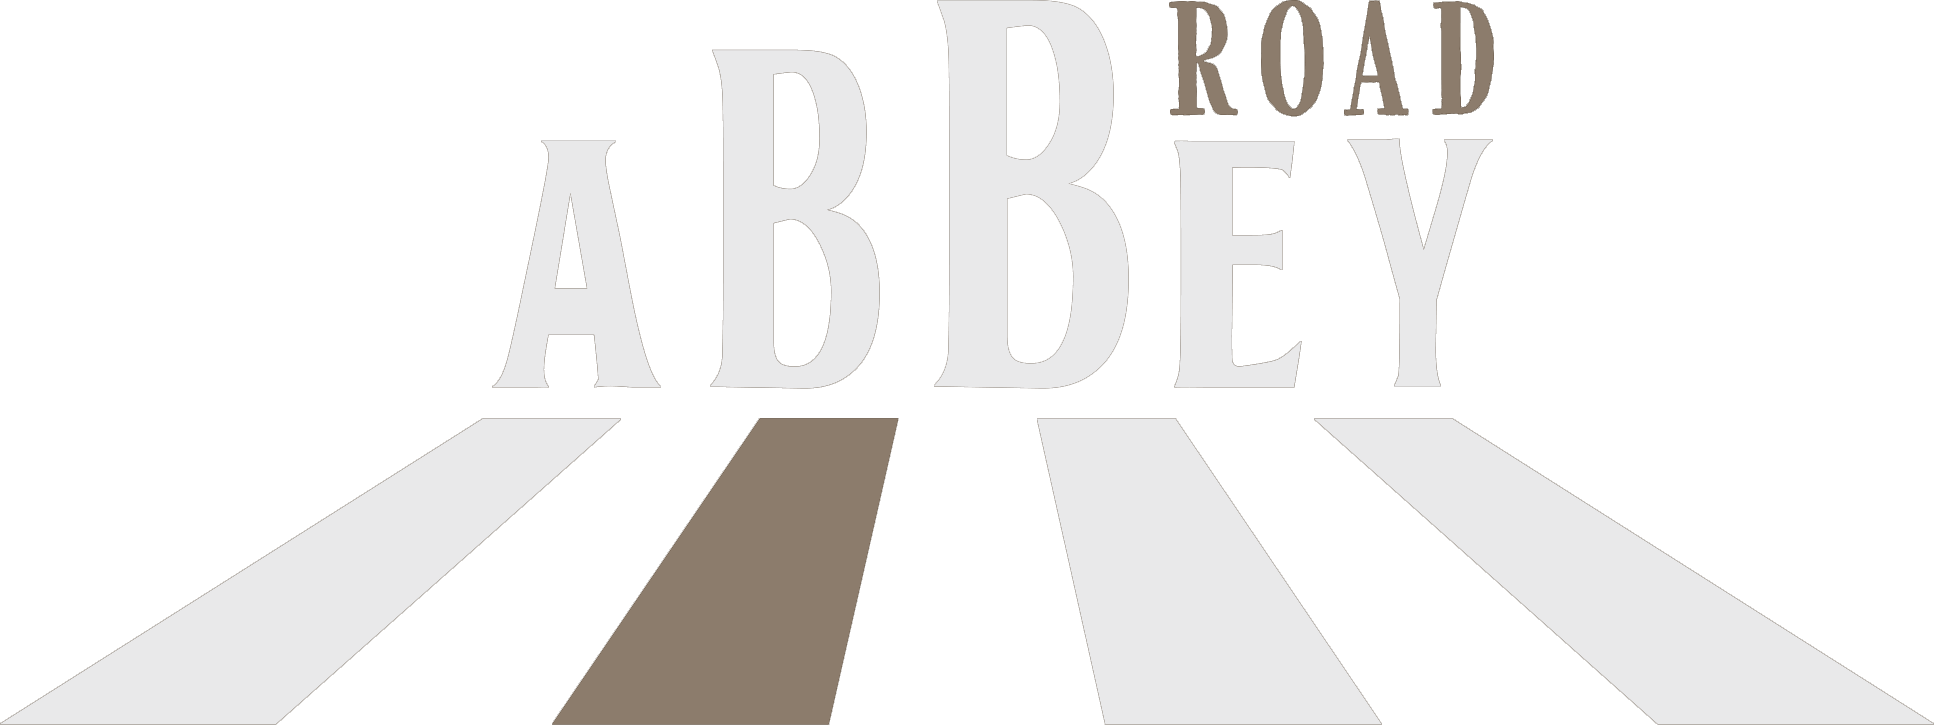 Abbey Road Caserta